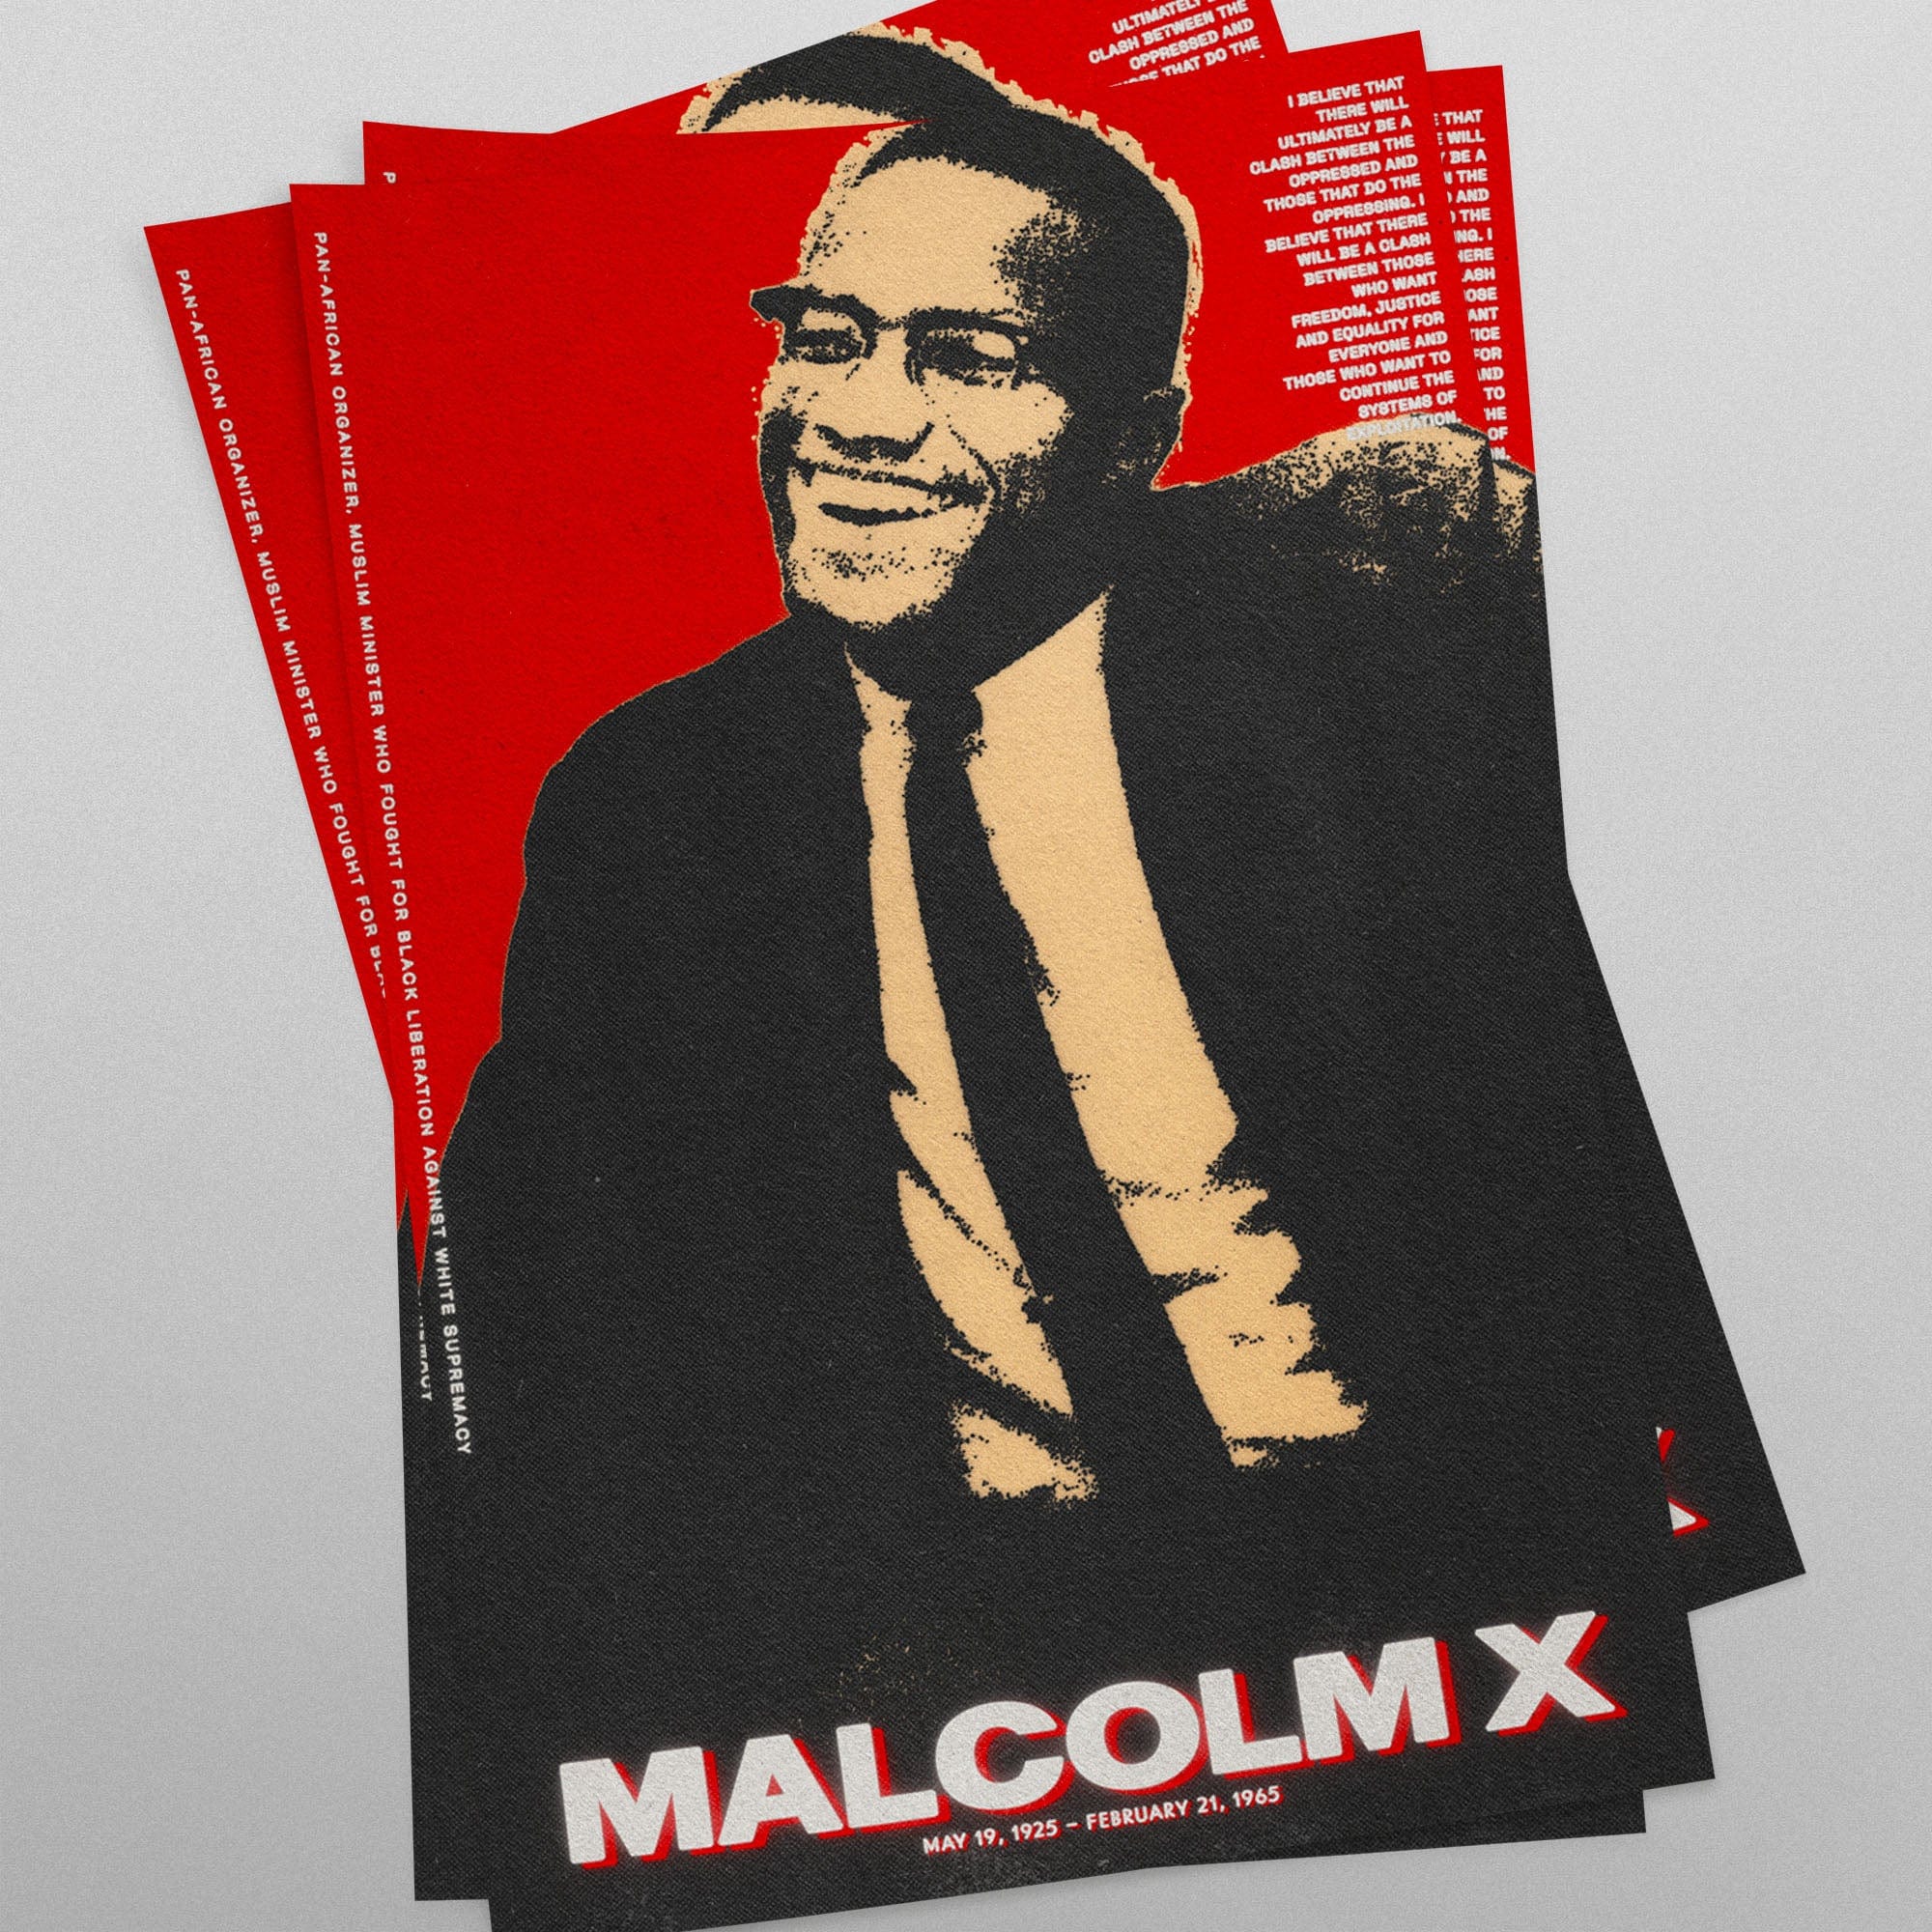 Malcolm X (11 x 17 Poster print)